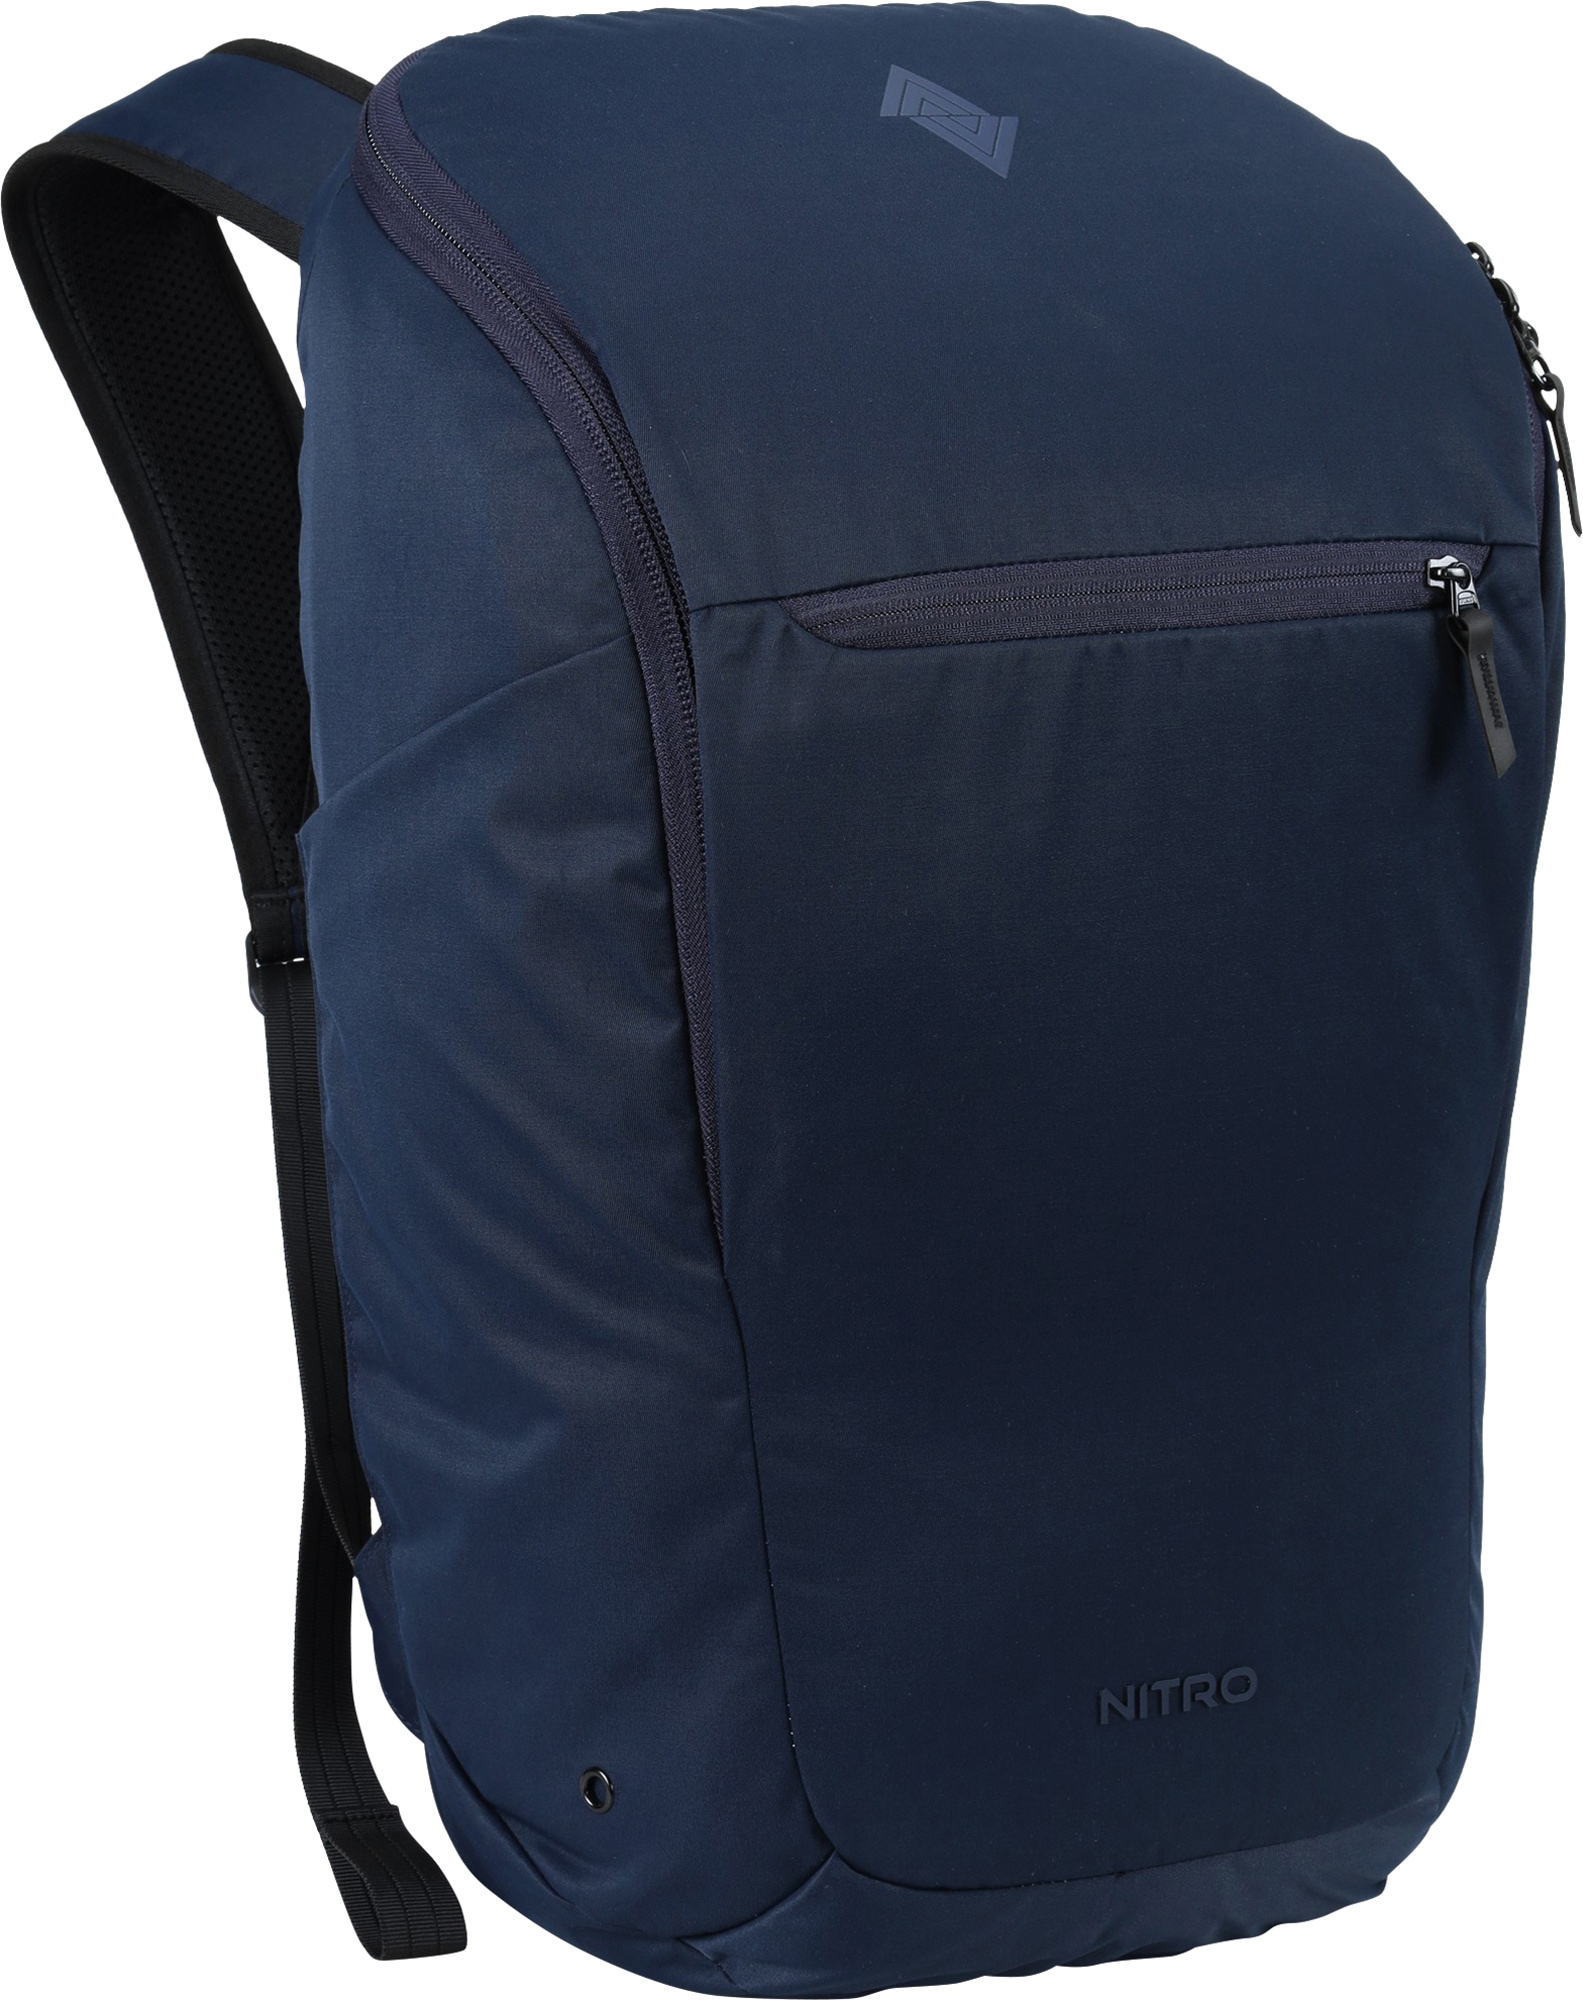 NITRO Freizeitrucksack »Nikuro Traveller«, Reisetasche, Travel Bag, Alltagsrucksack, Daypack